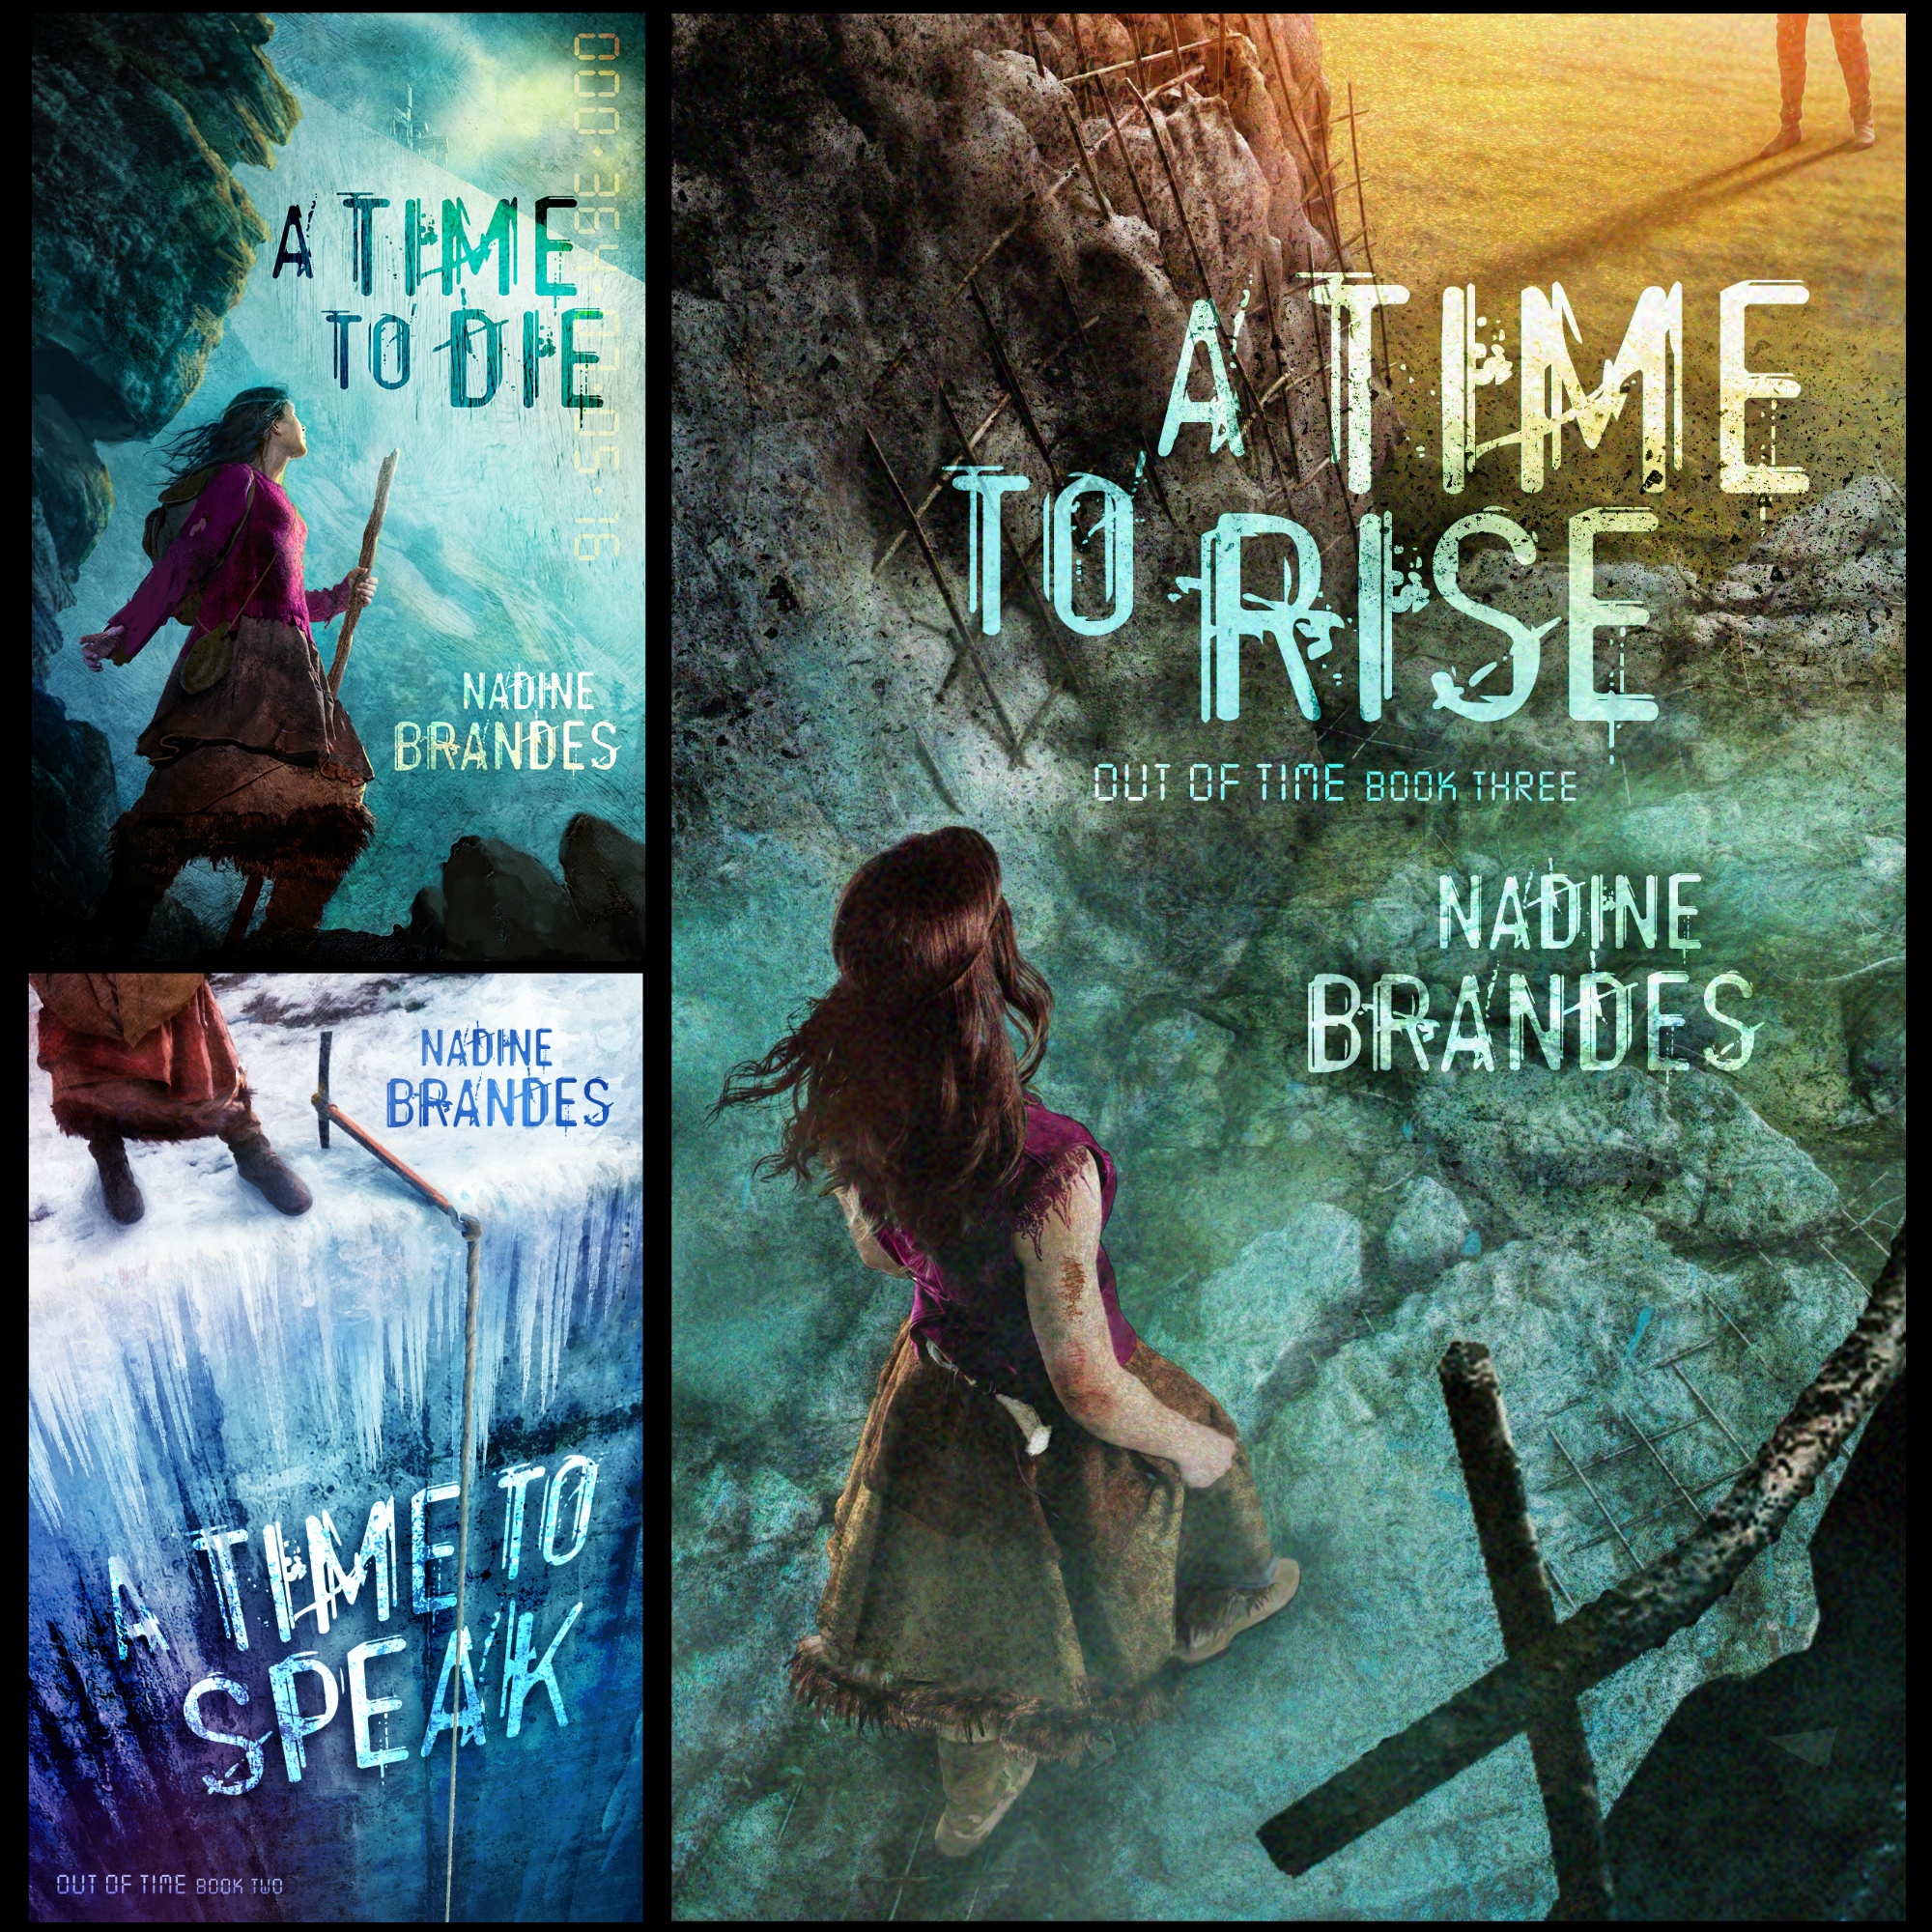 A Time to Die by Nadine Brandes